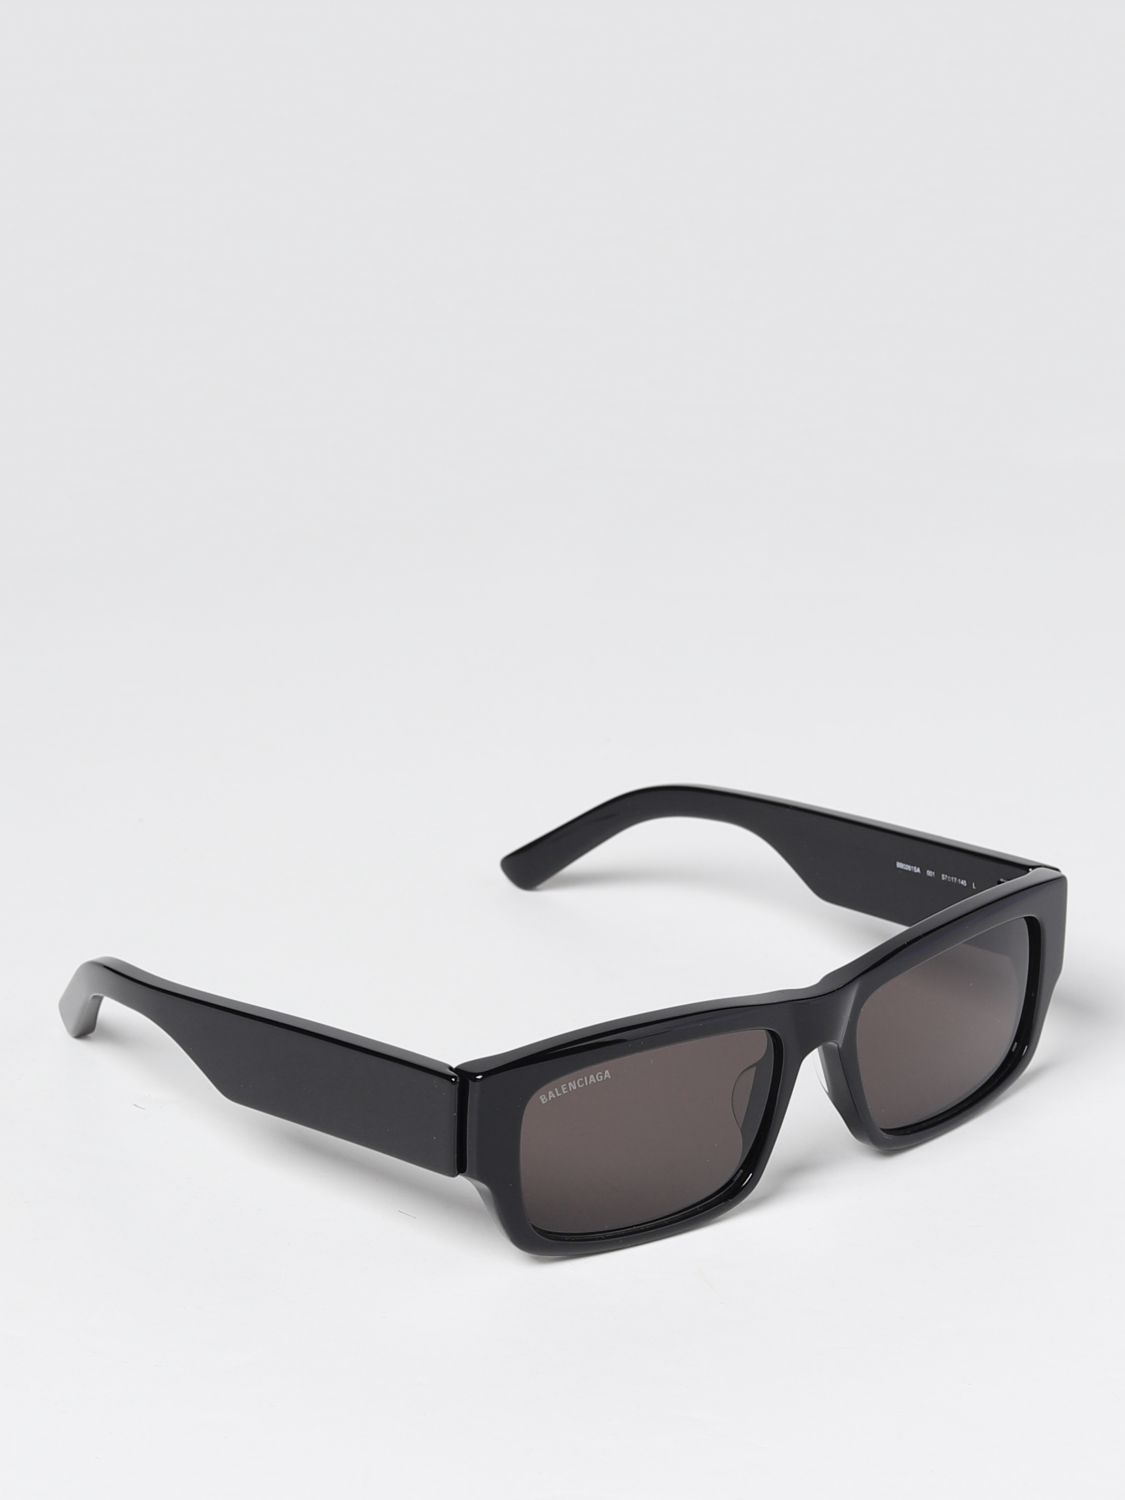 Balenciaga Sunglasses for Men for sale  eBay